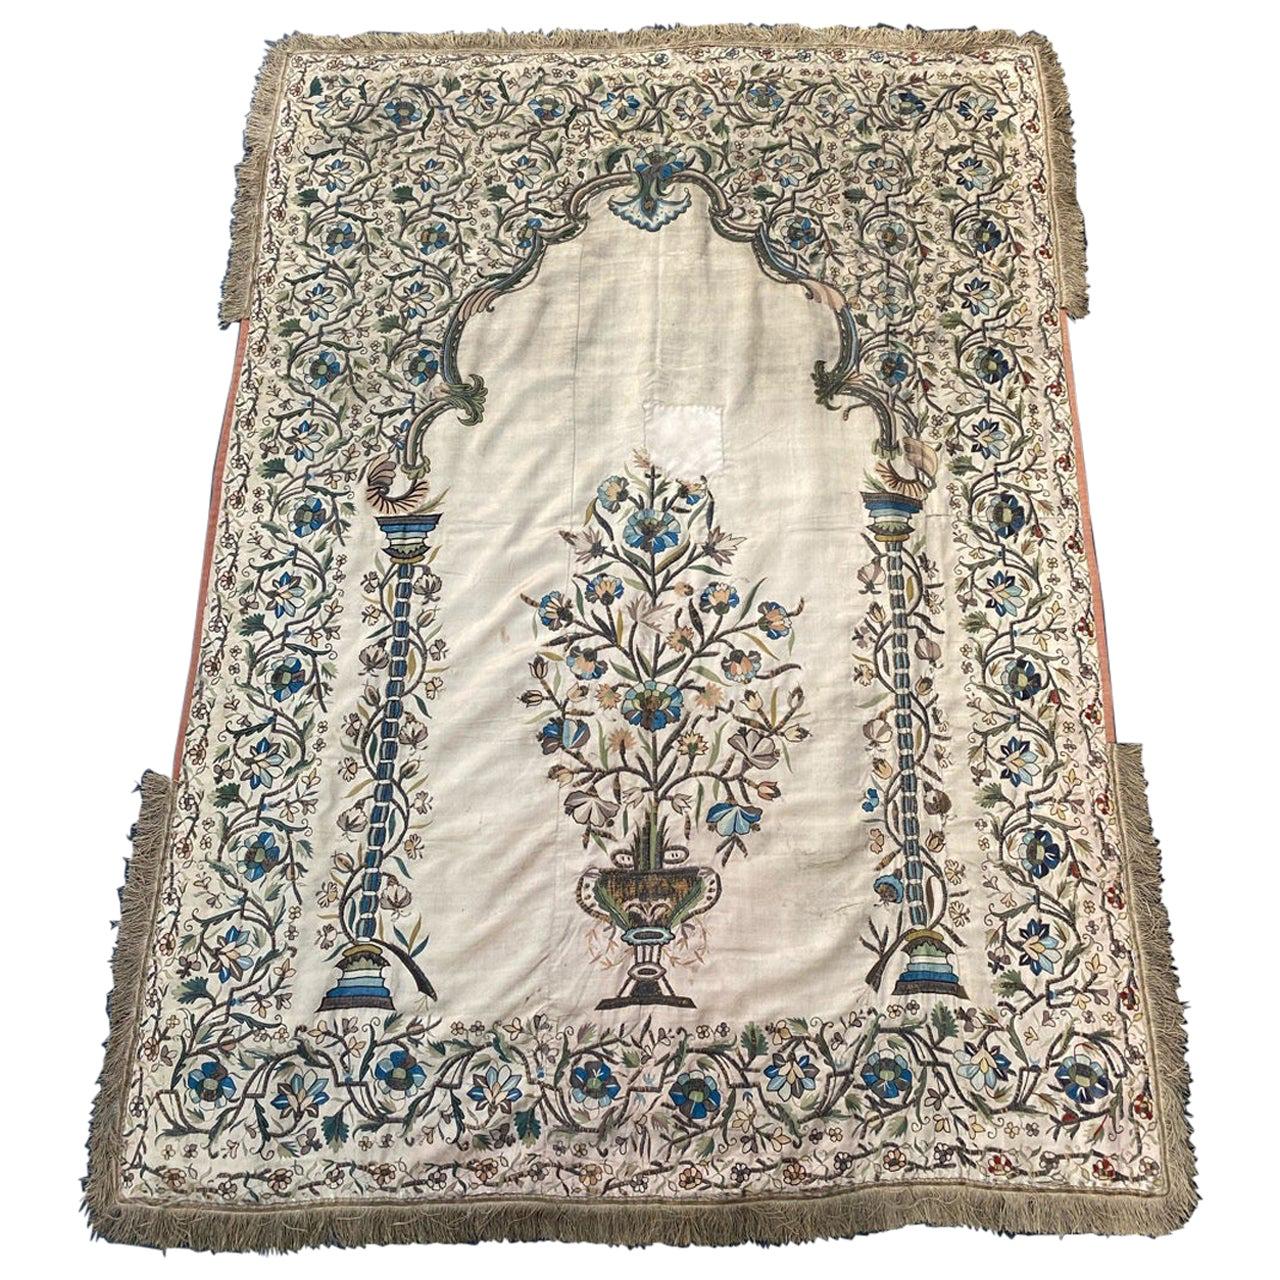 Bobyrug’s Wonderful Antique Turkish Ottoman Embroidery